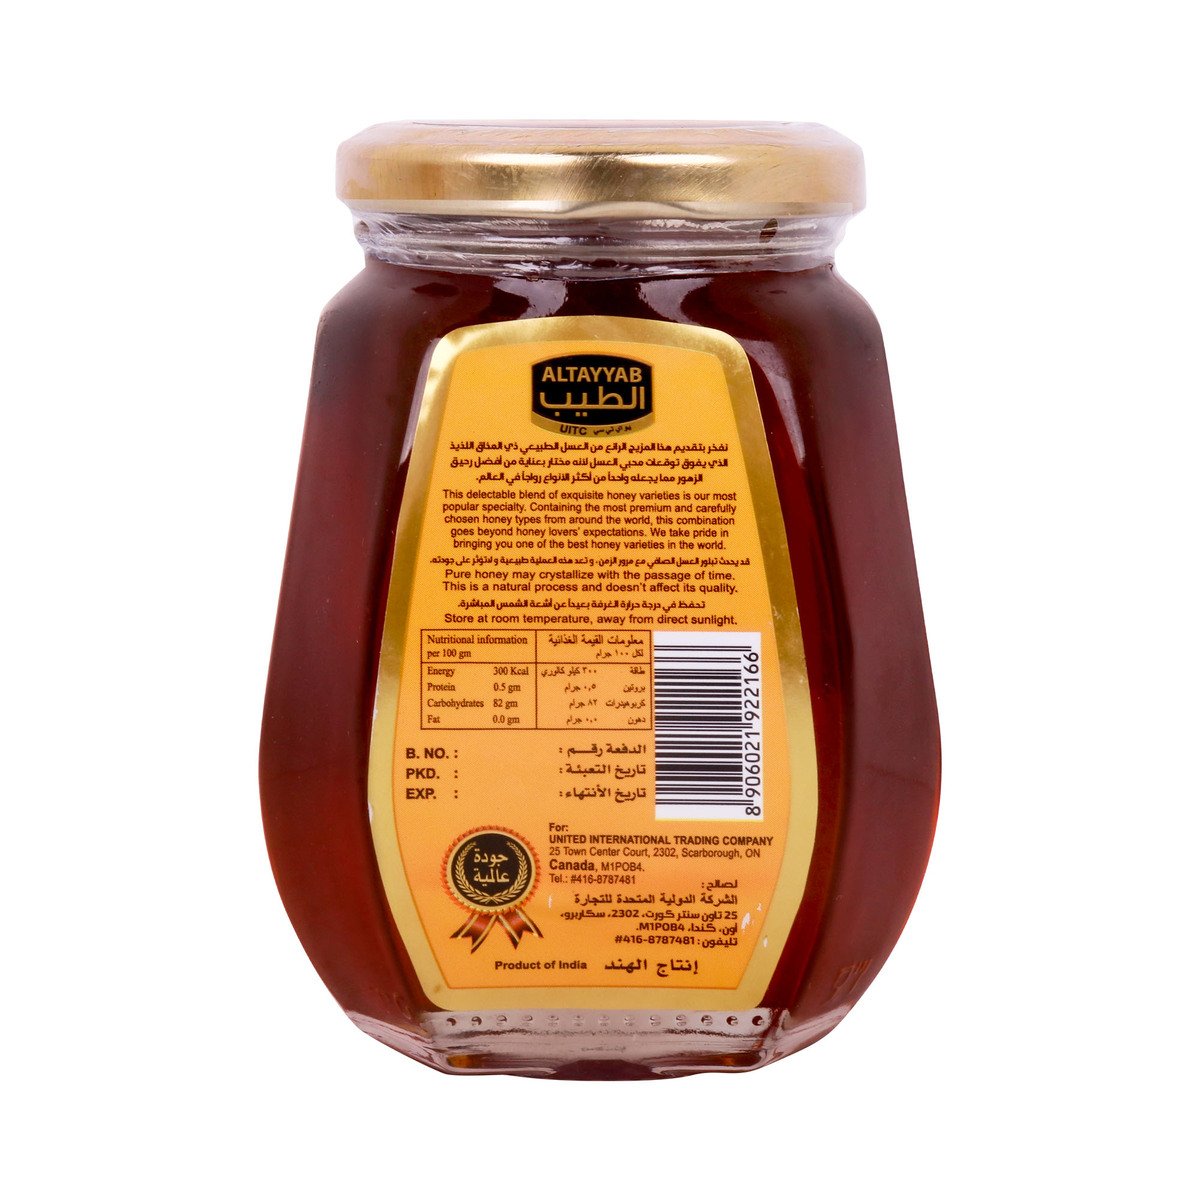 Al Tayyab Natural Honey 500g